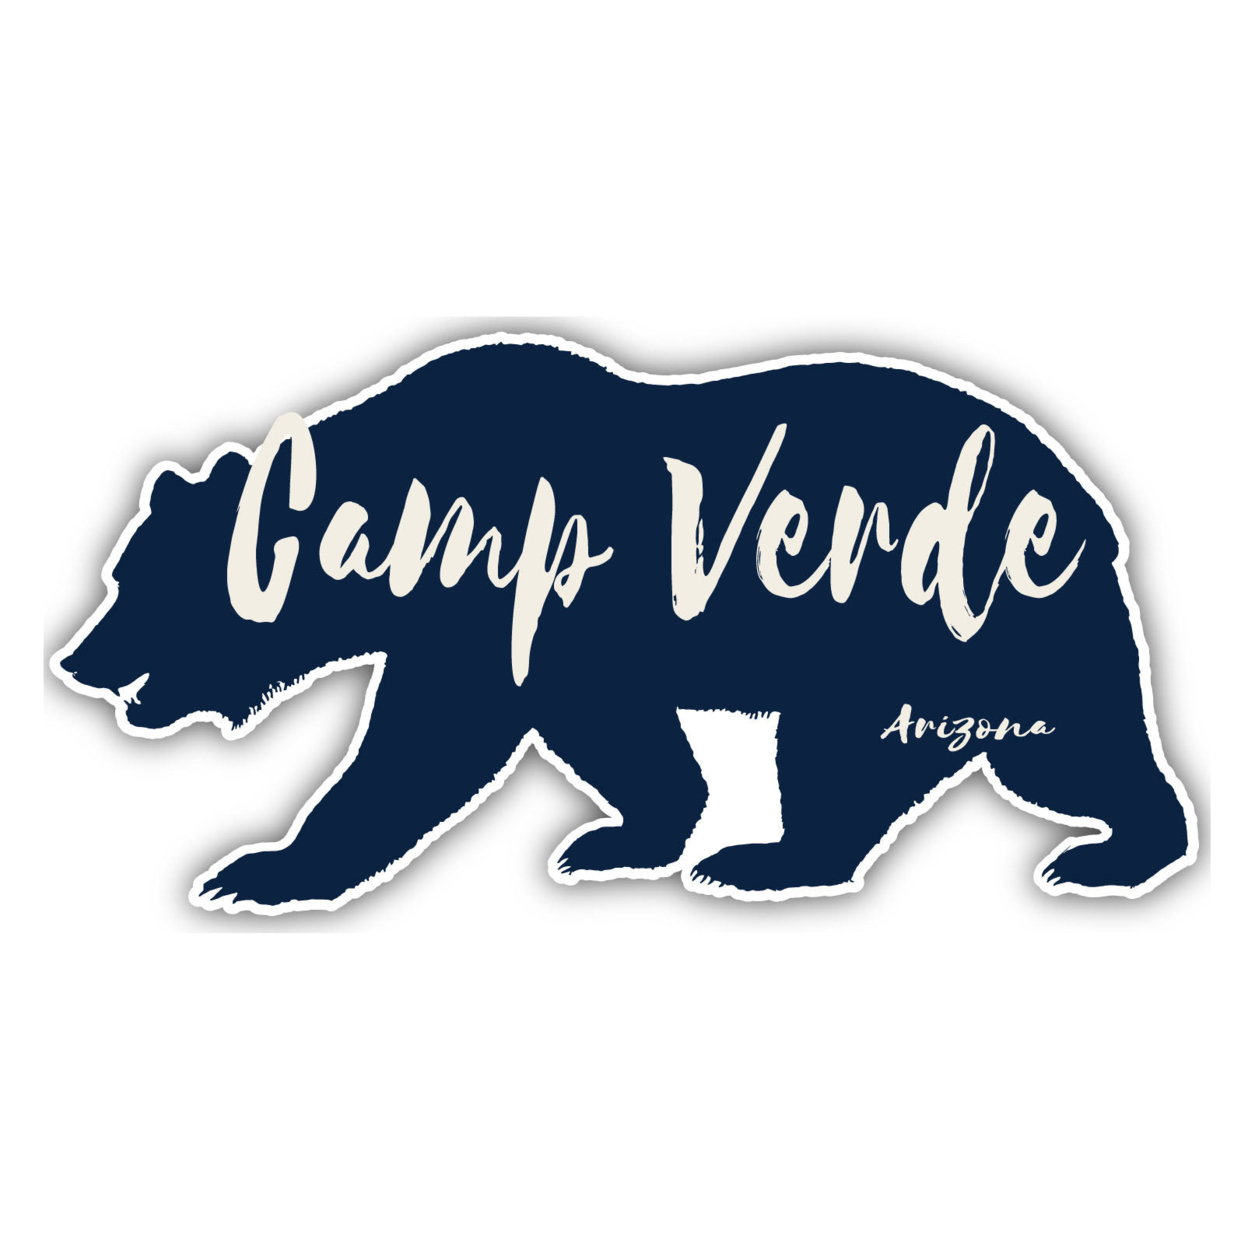 Camp Verde Arizona Souvenir Decorative Stickers (Choose Theme And Size) - Single Unit, 10-Inch, Bear